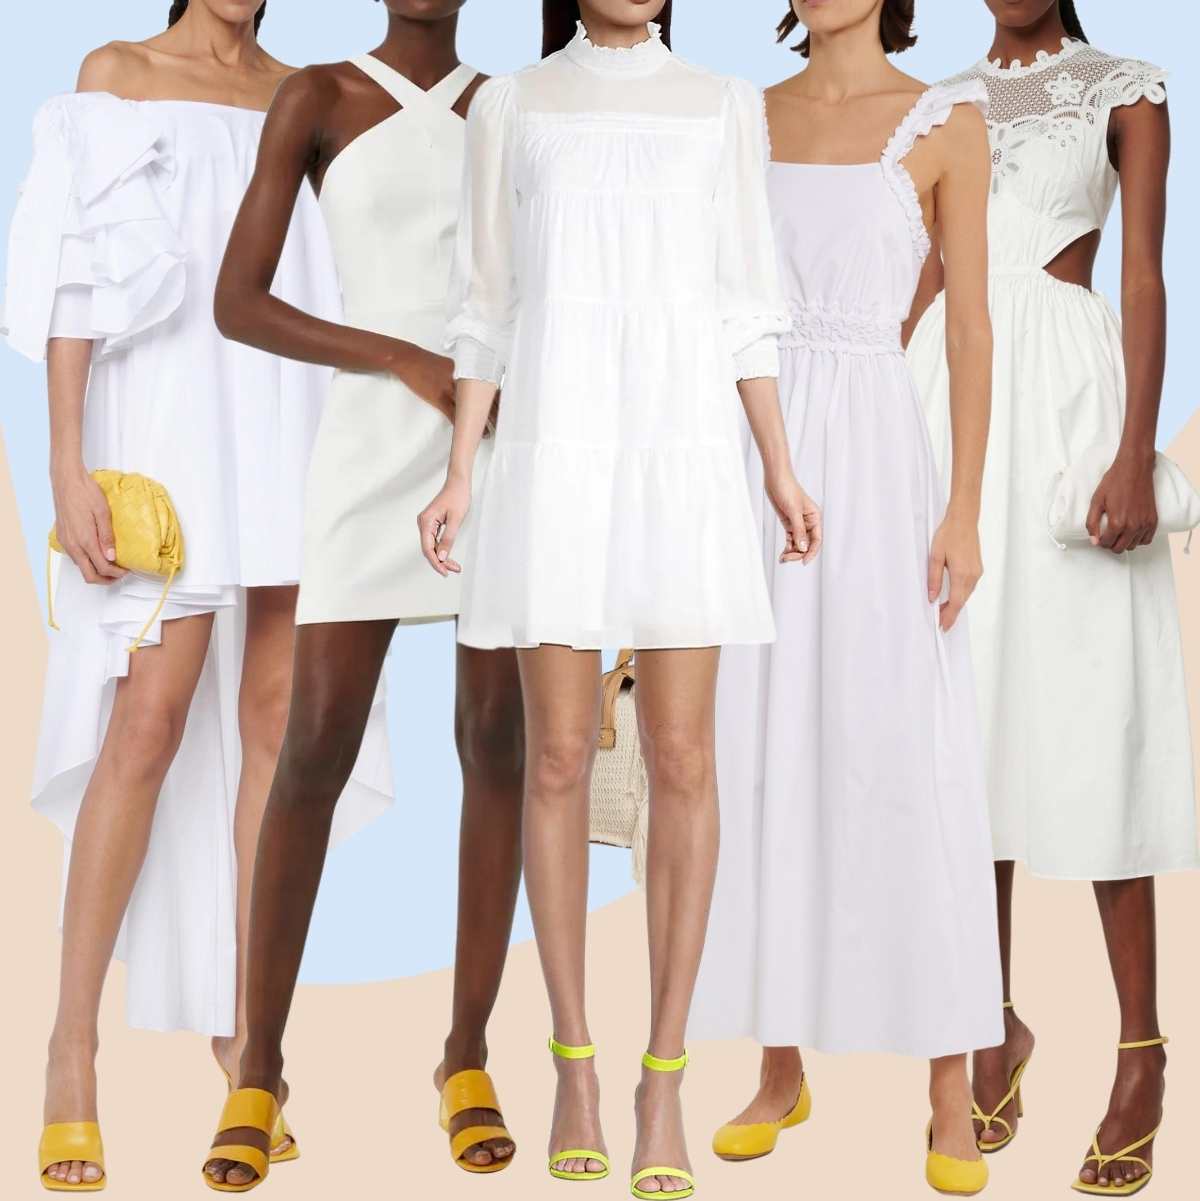 New white Dresses Designs || Stylish One Color White Combination Suit. |  Party wear dresses, Designer dresses, Dresses